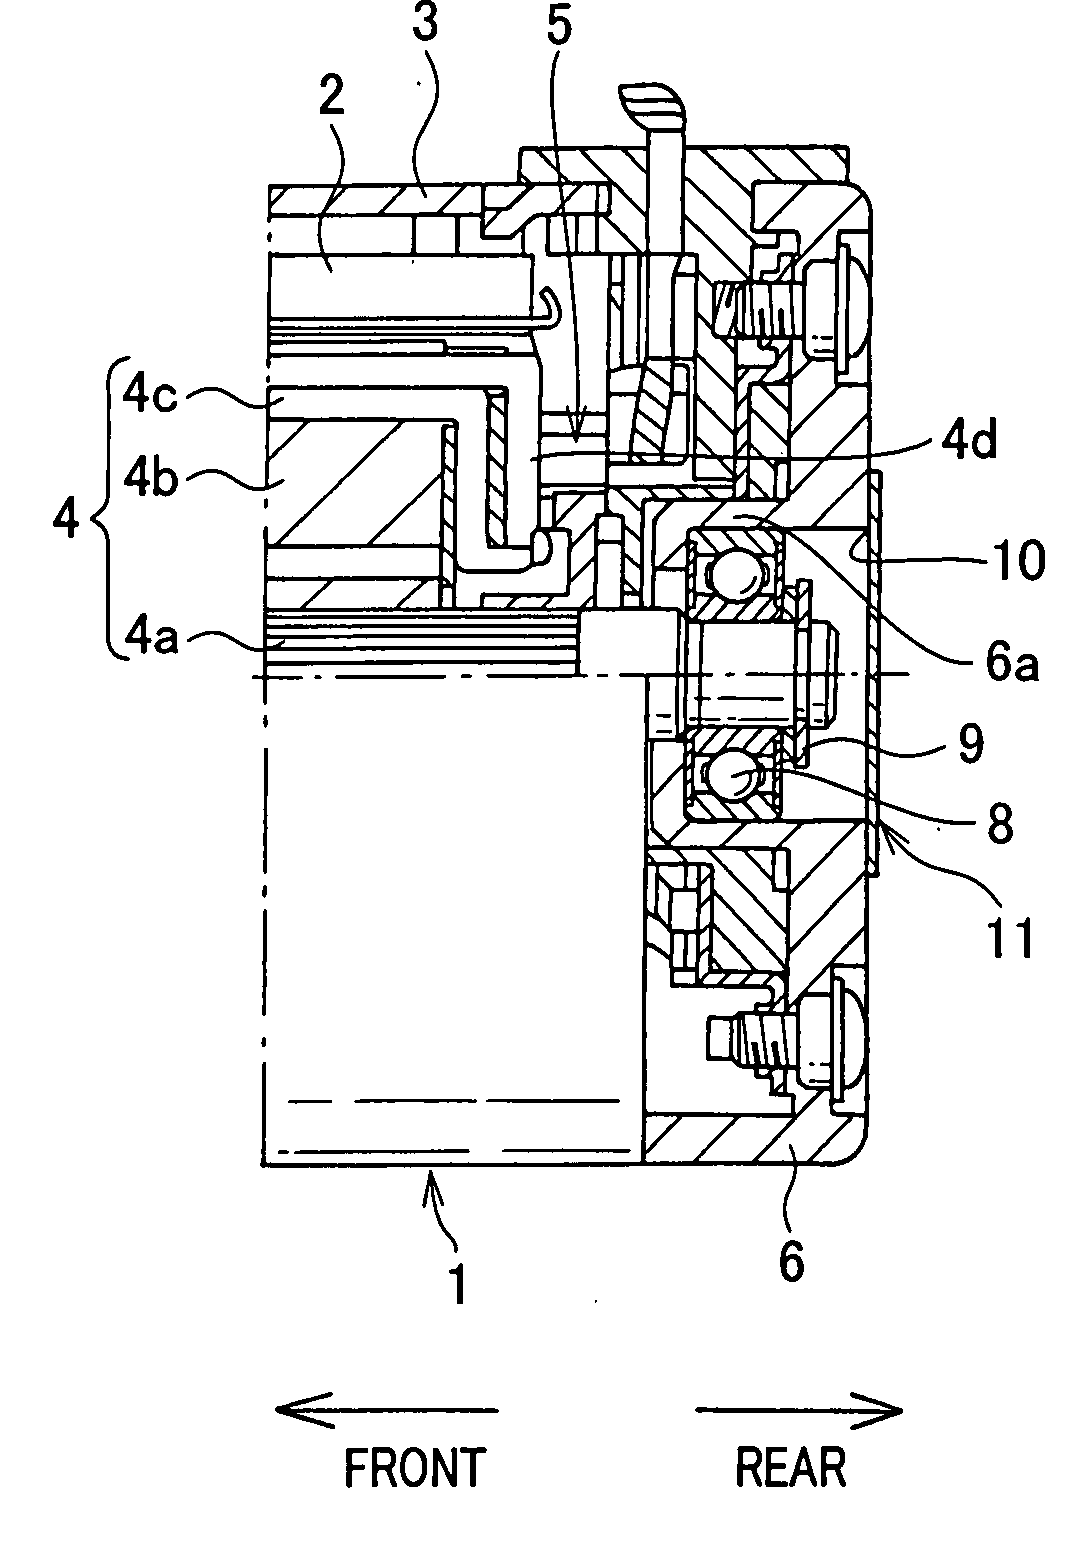 Starter motor having seal plate to seal bearing box formed in end frame